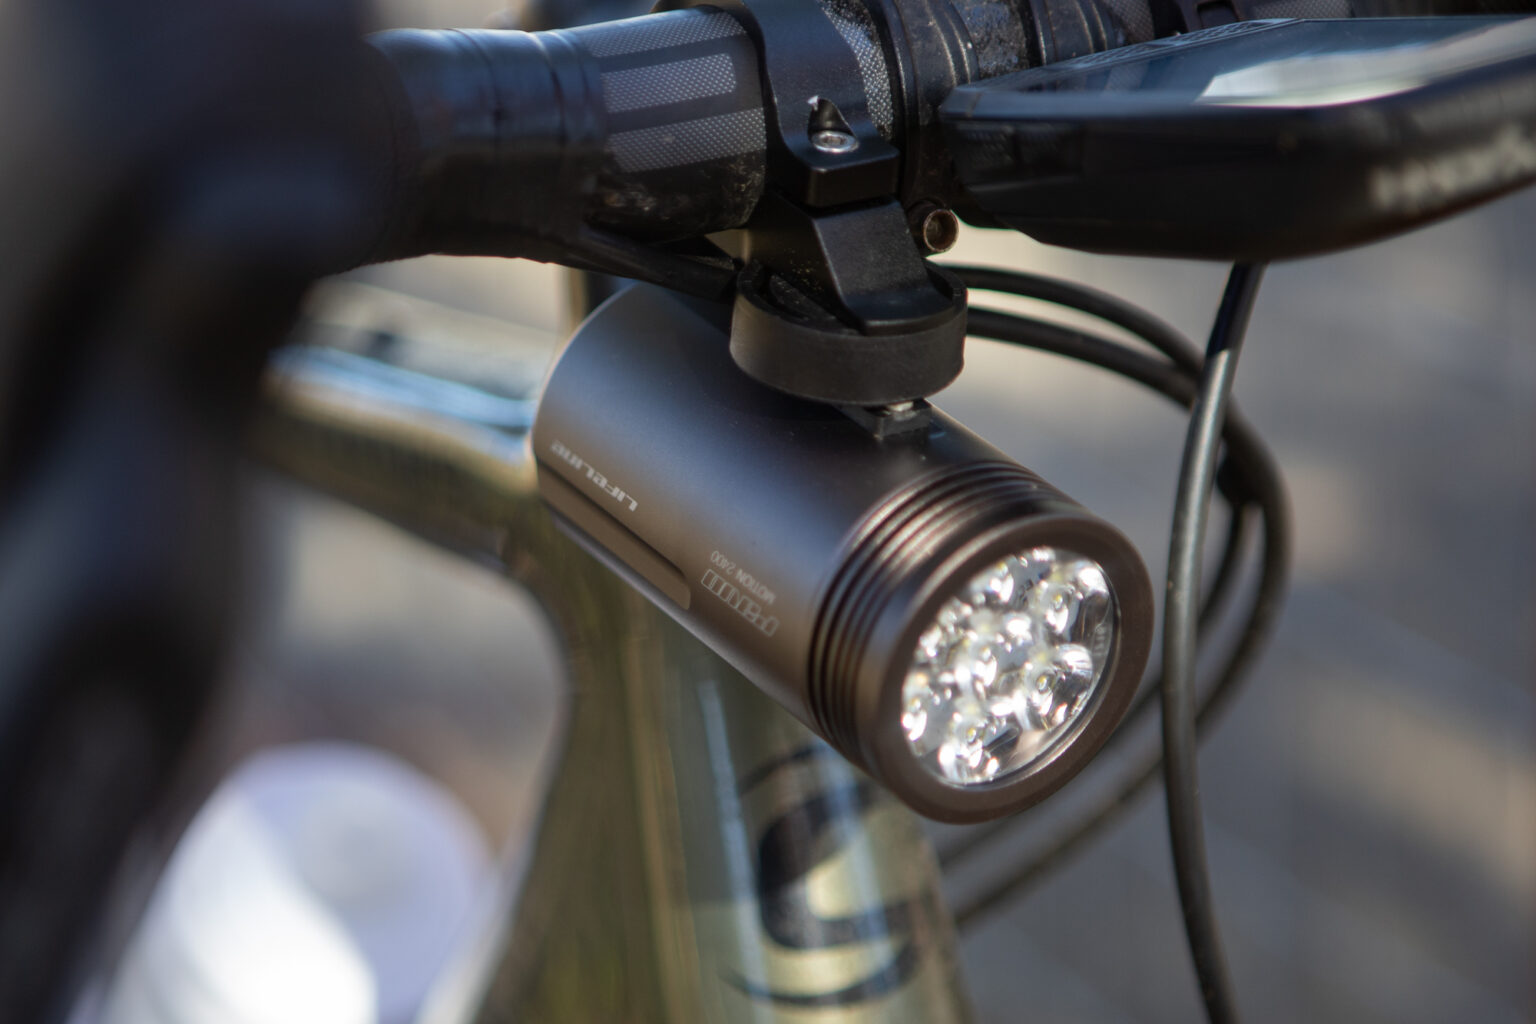 Review: Lifeline Pavo Motion 2400 headlight â BikePortland